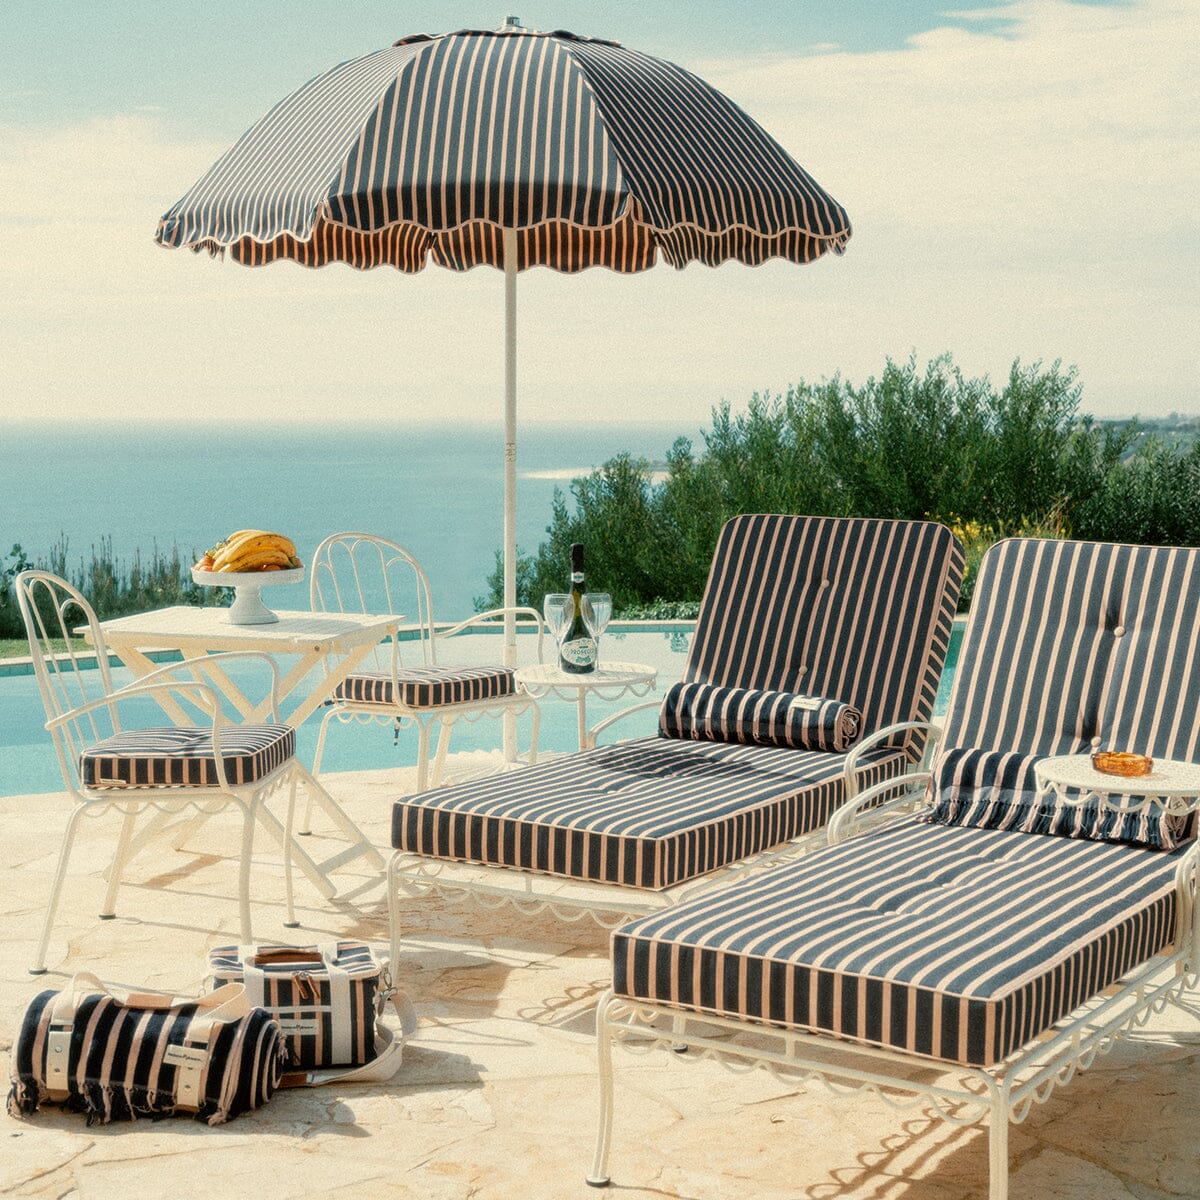 The Patio Umbrella - Monaco Navy And Pink Stripe Patio Umbrella Business & Pleasure Co 